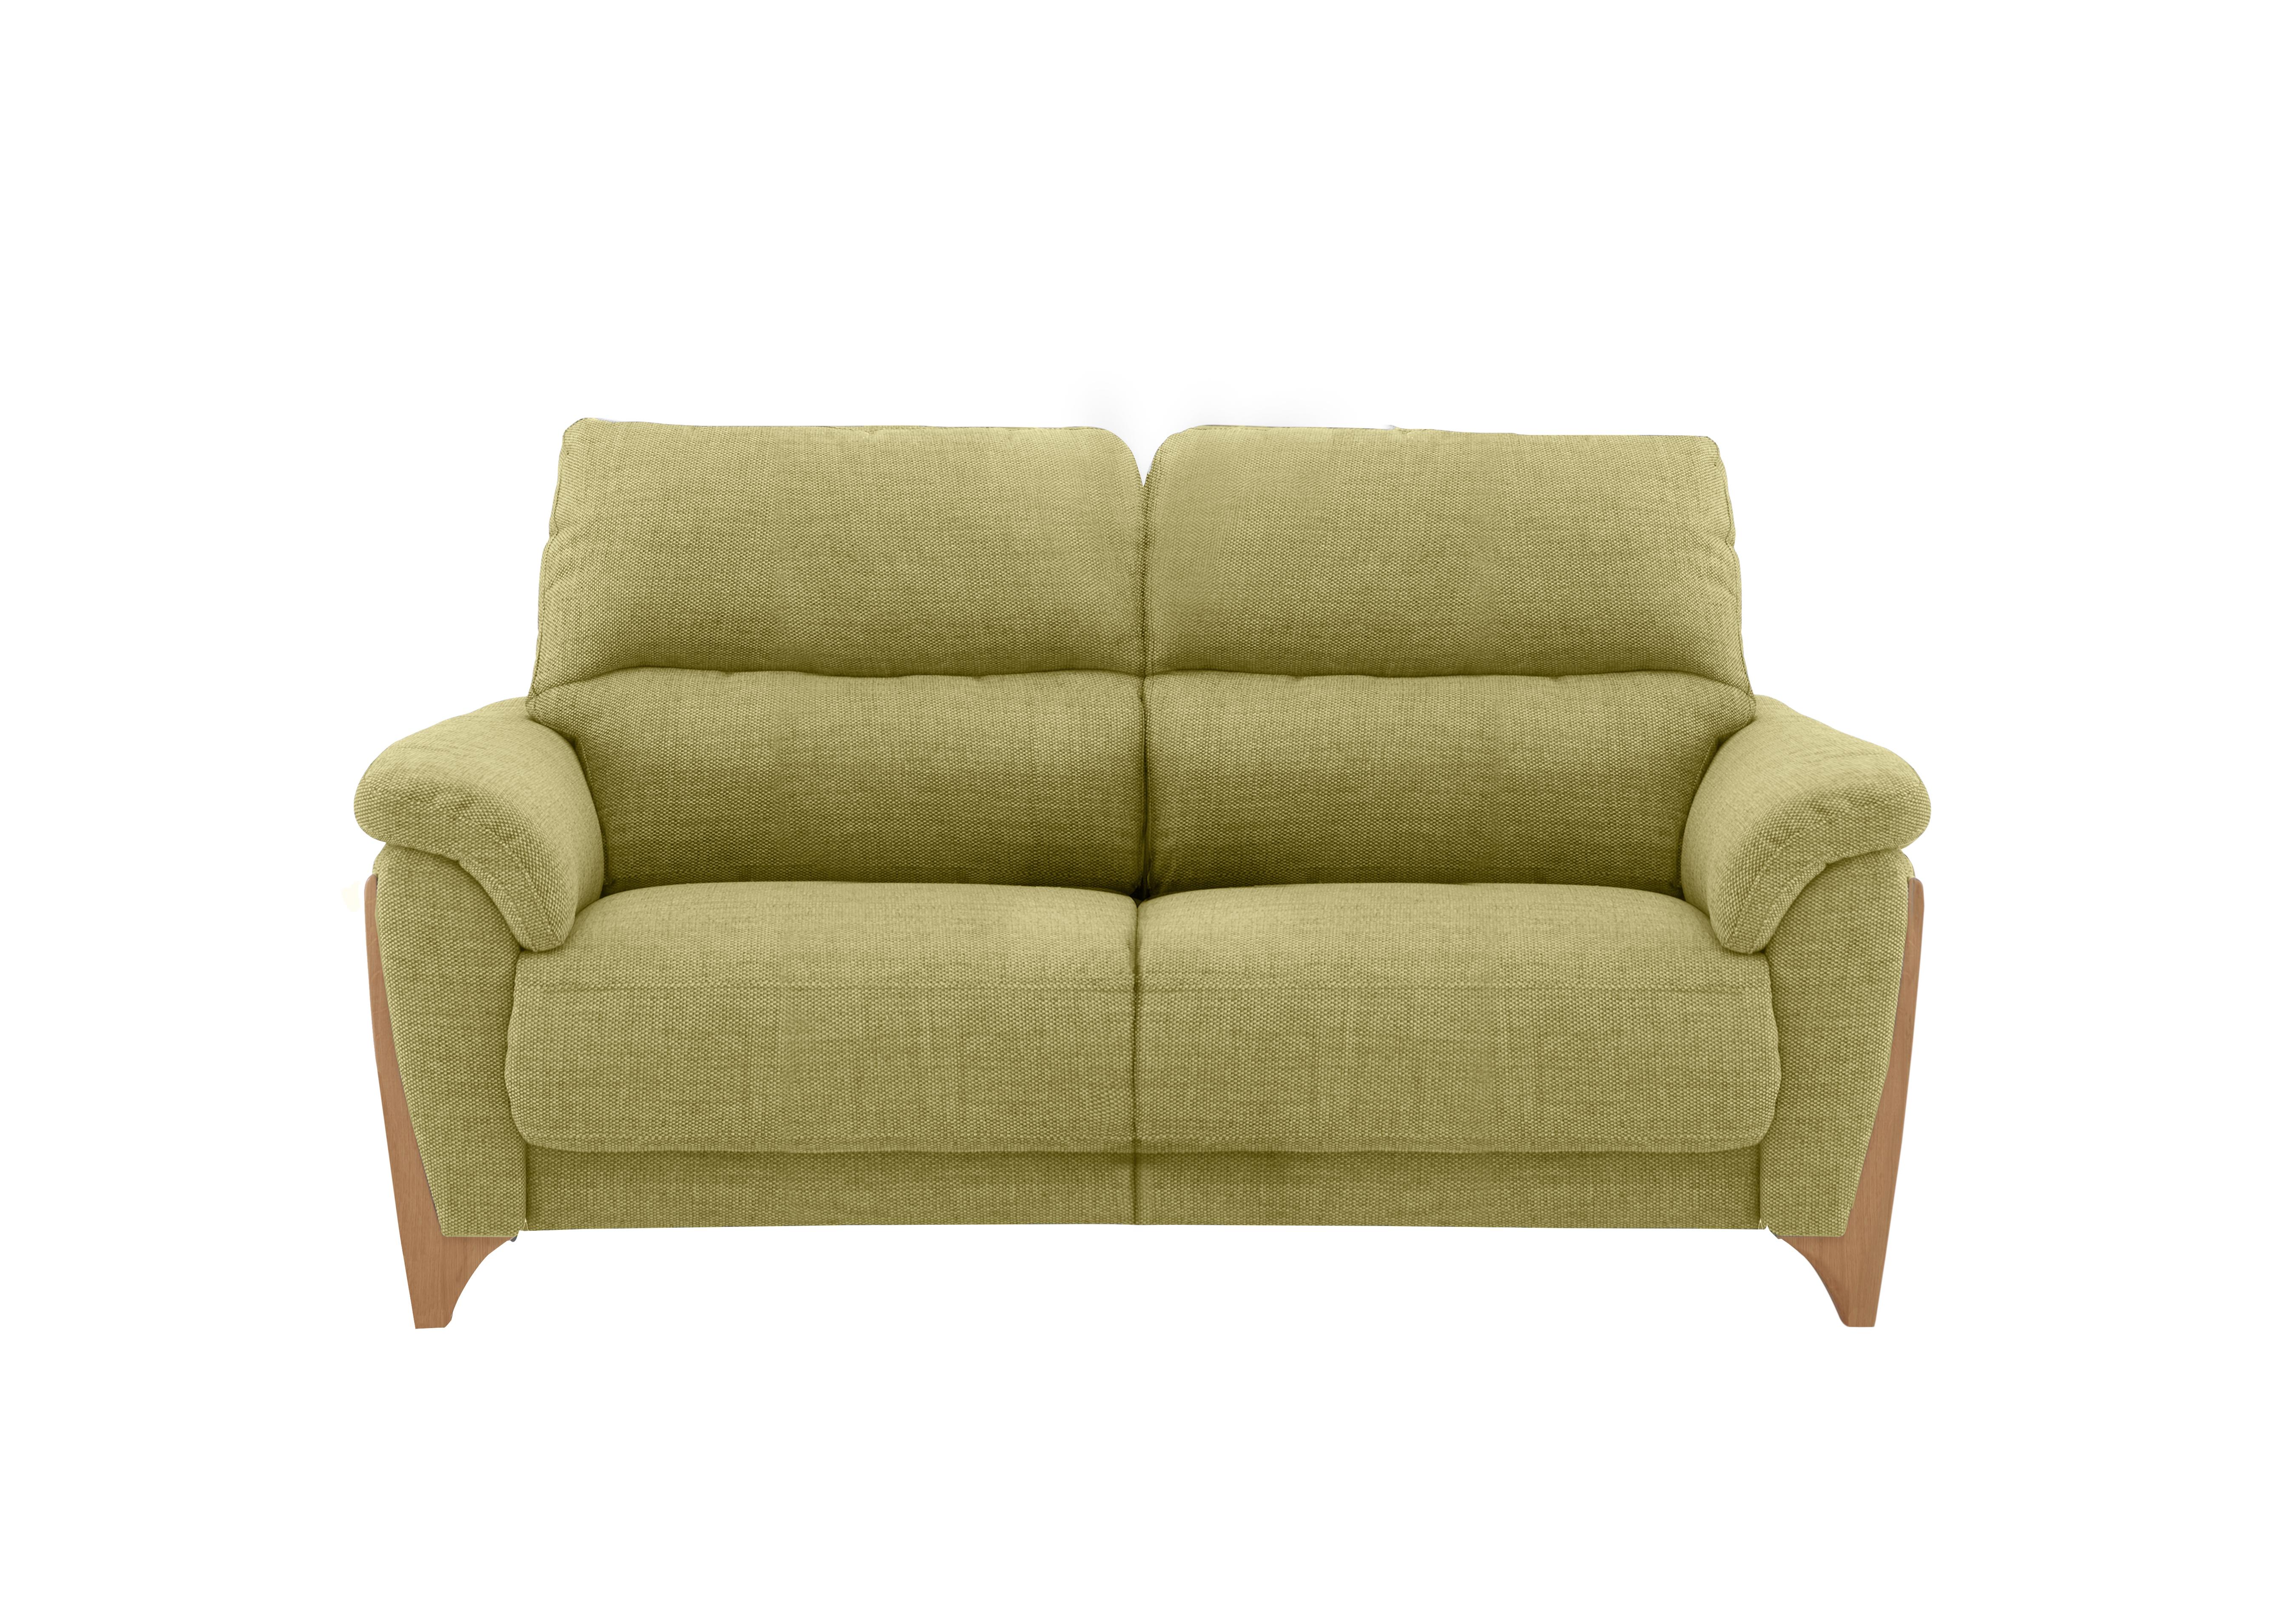 Enna Medium Fabric Power Recliner Sofa in P220 on Furniture Village